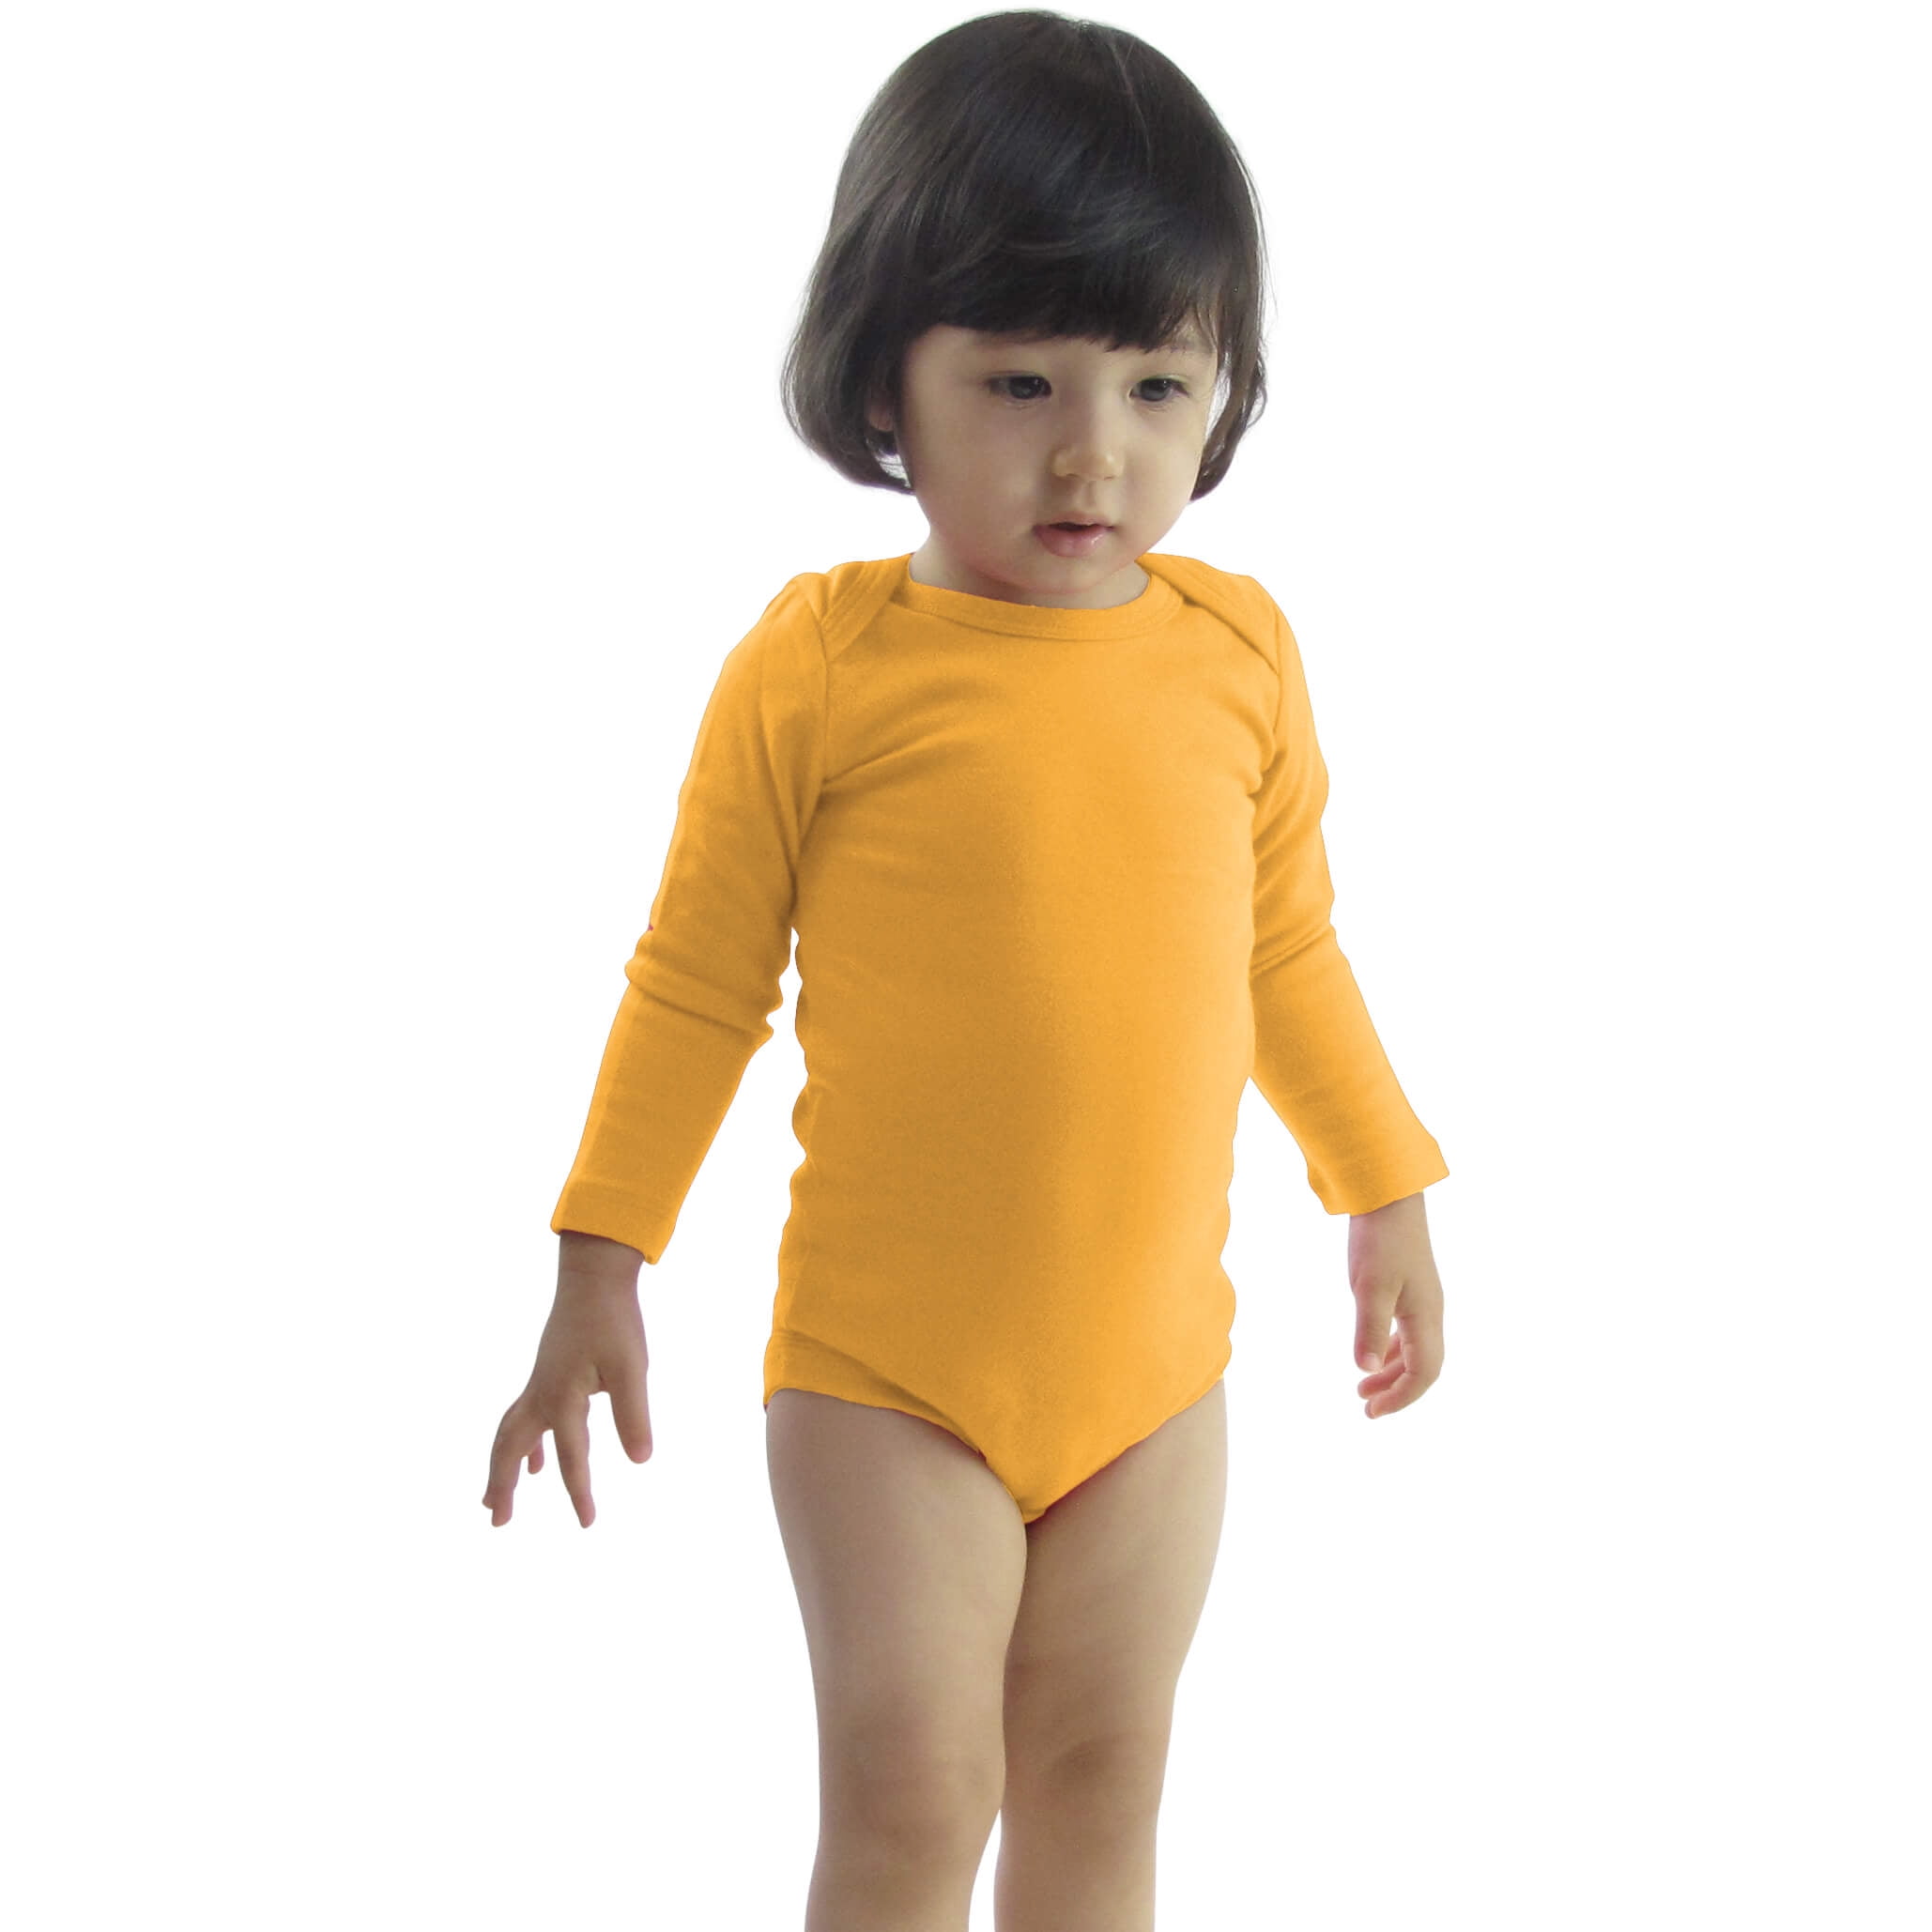 Couver Baby Cotton Longsleeve Onesie Infant Toddler Lap Shoulder Solid Color Bodysuit, Golden Yellow, 24M